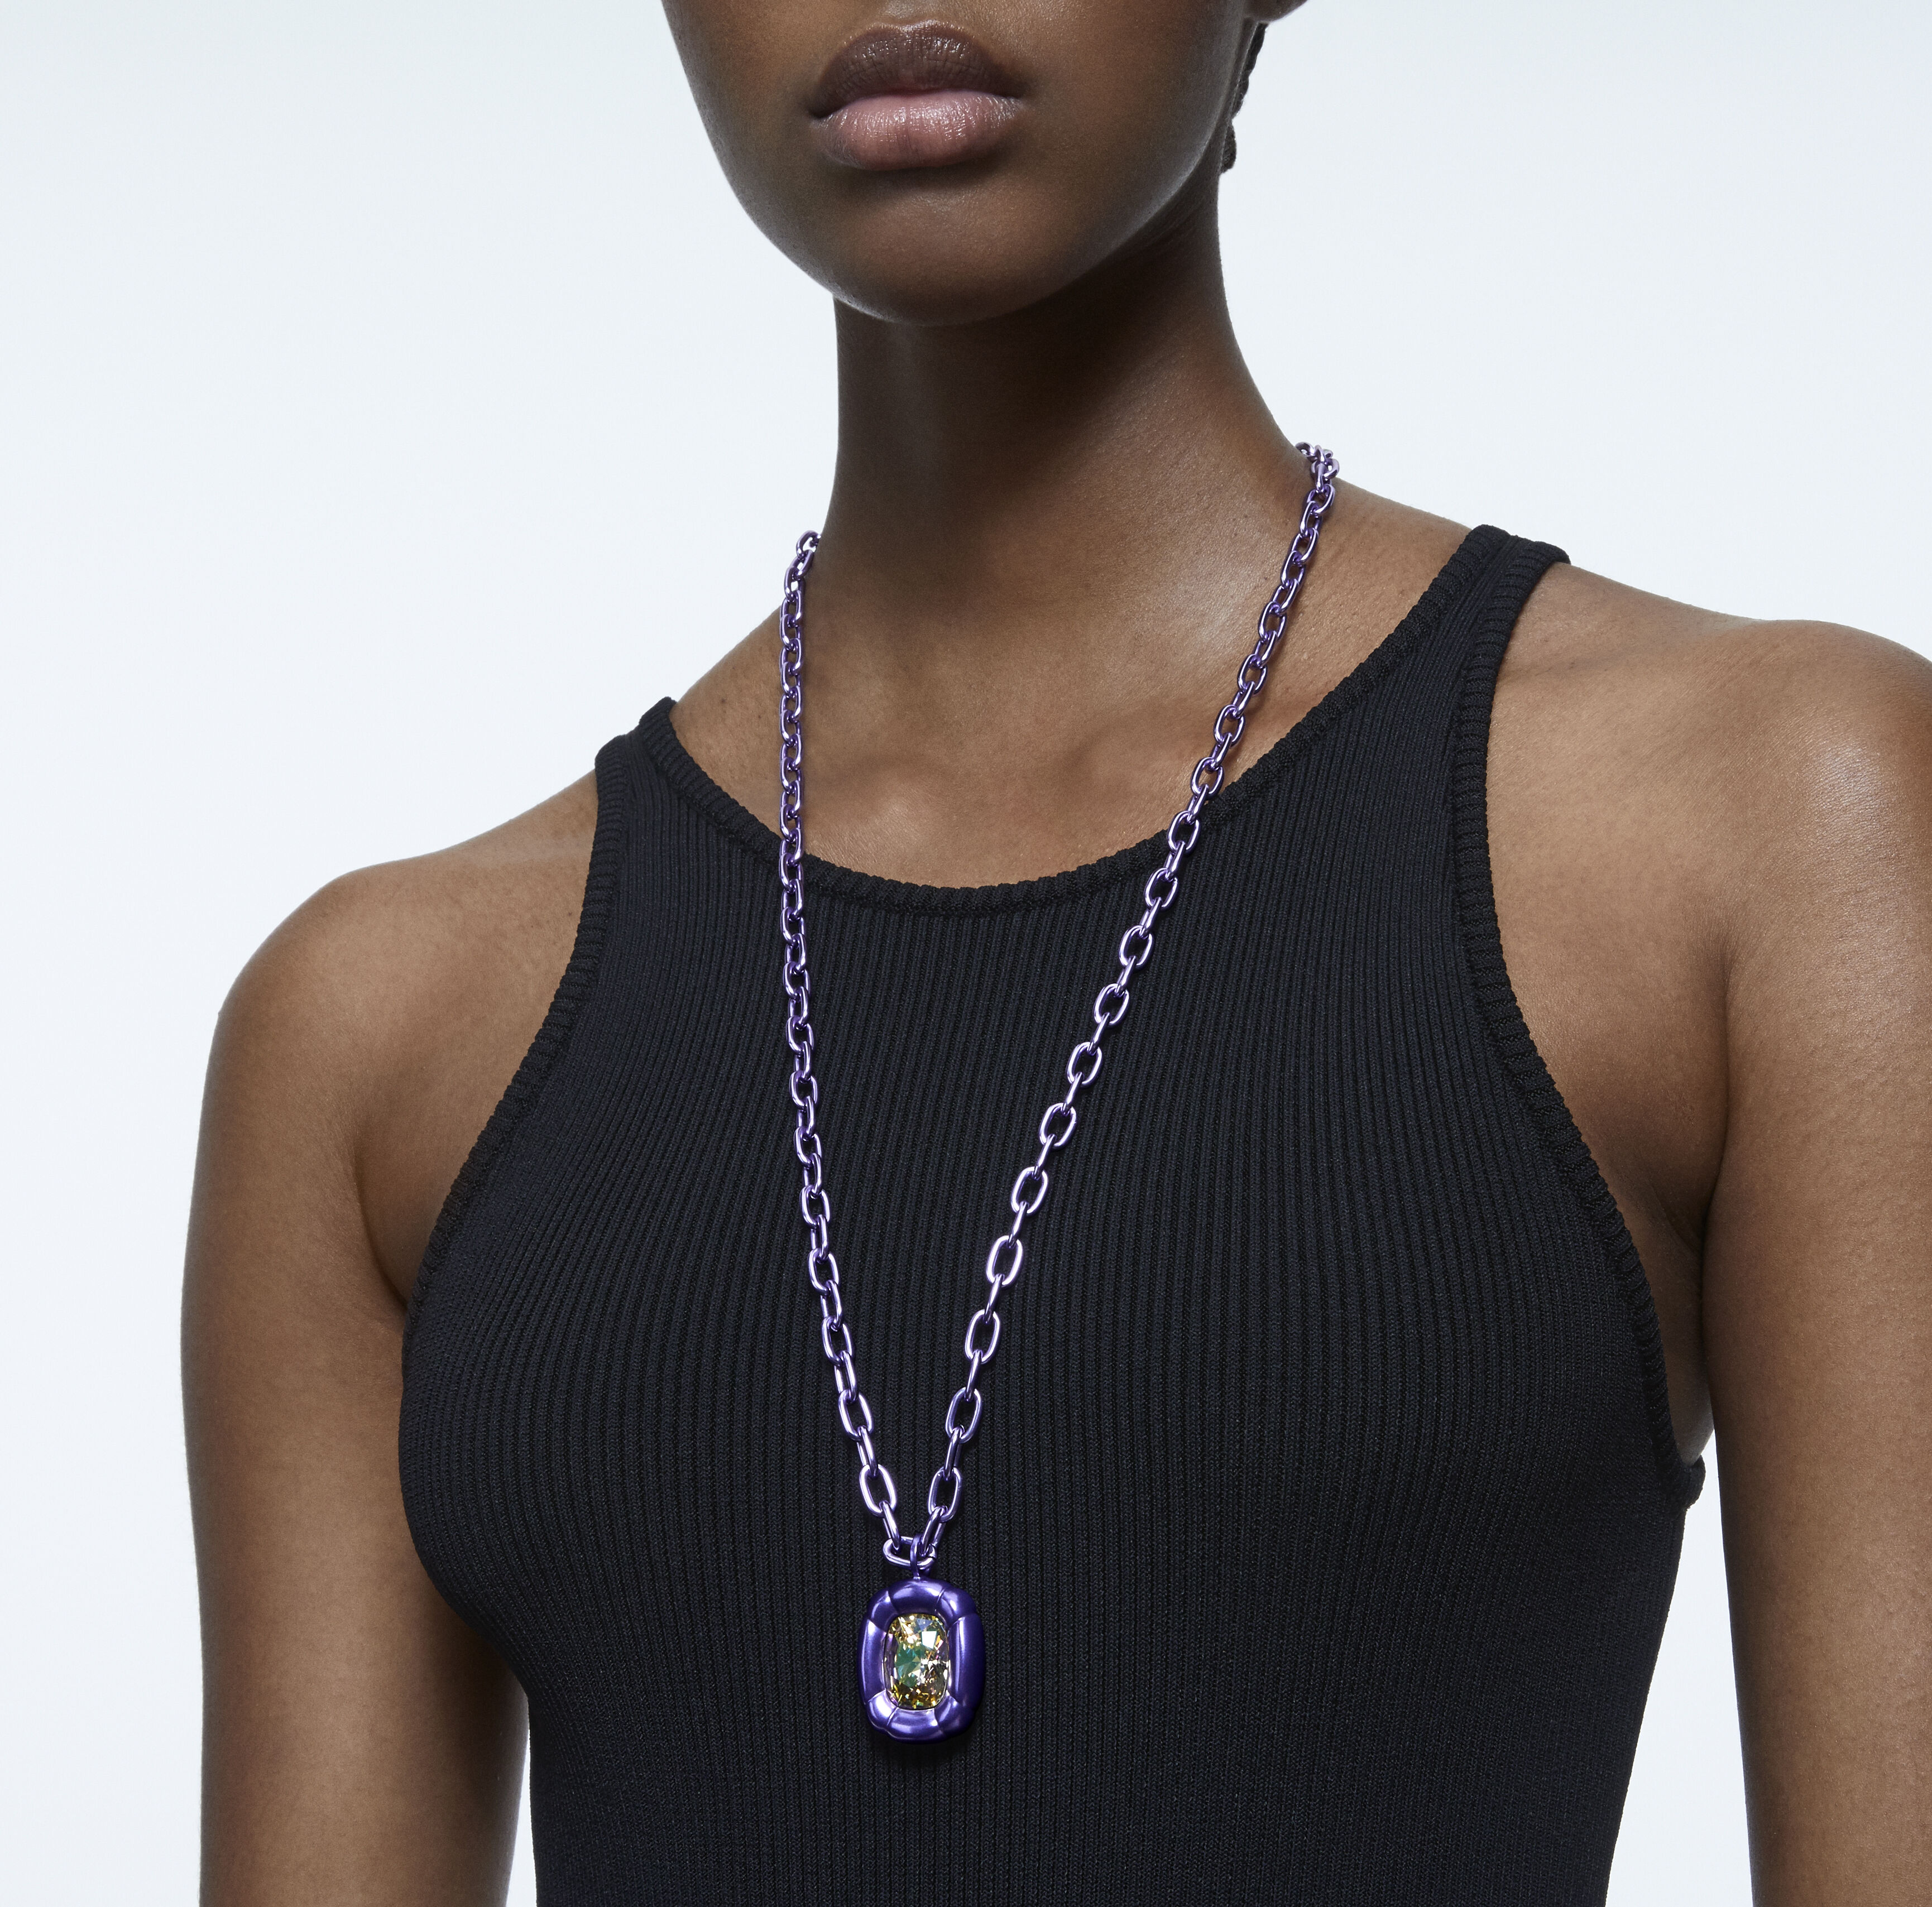 SALE: Blue and Purple Swarovski Crystal Woven Necklace Choker Sterling  Silver